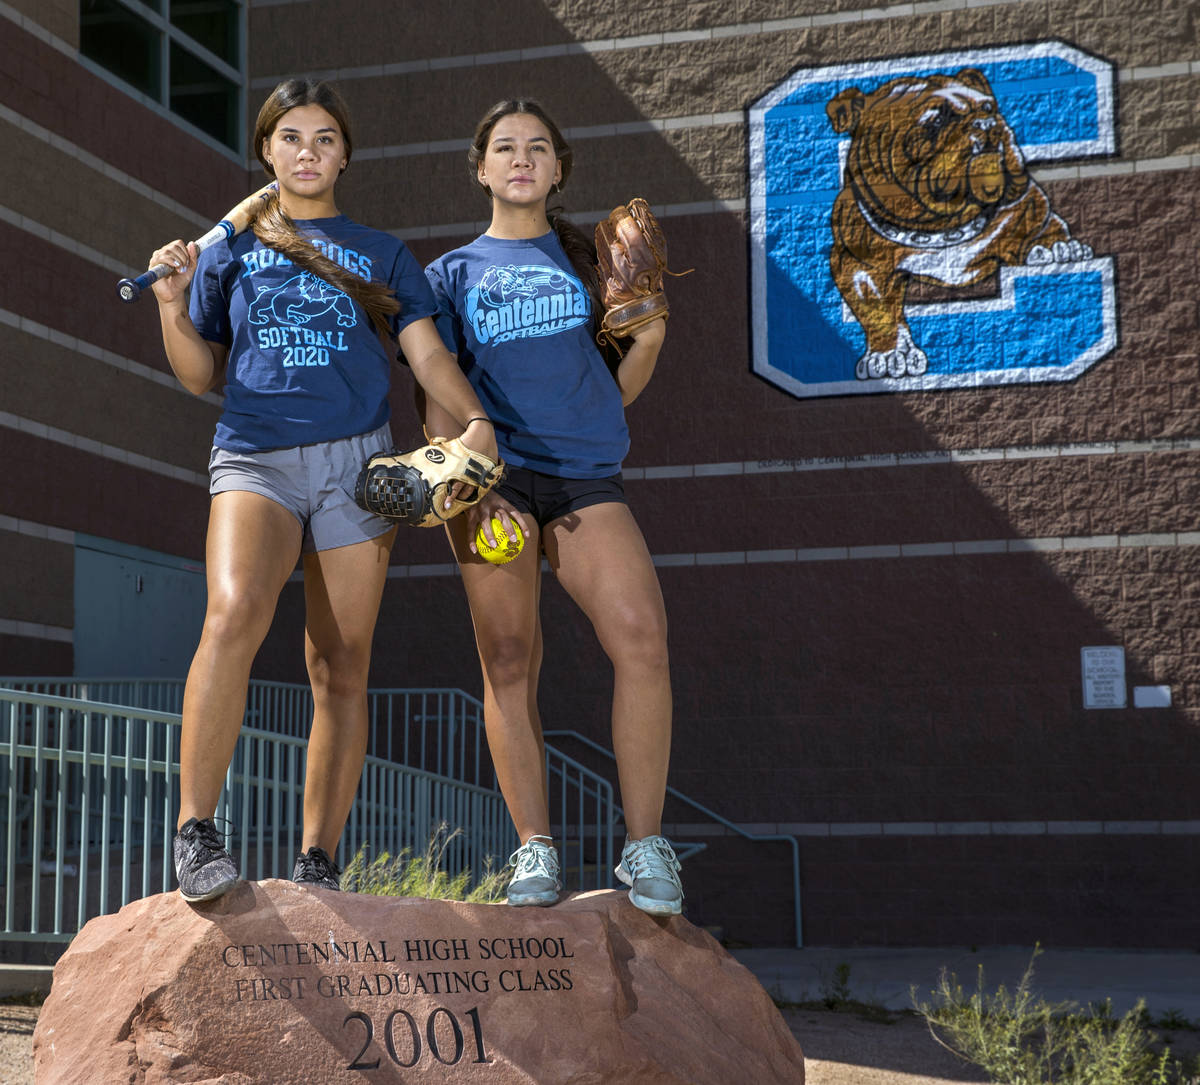 Samantha, left, and Natasha Lawrence as seniors from the Centennial High School softball team w ...